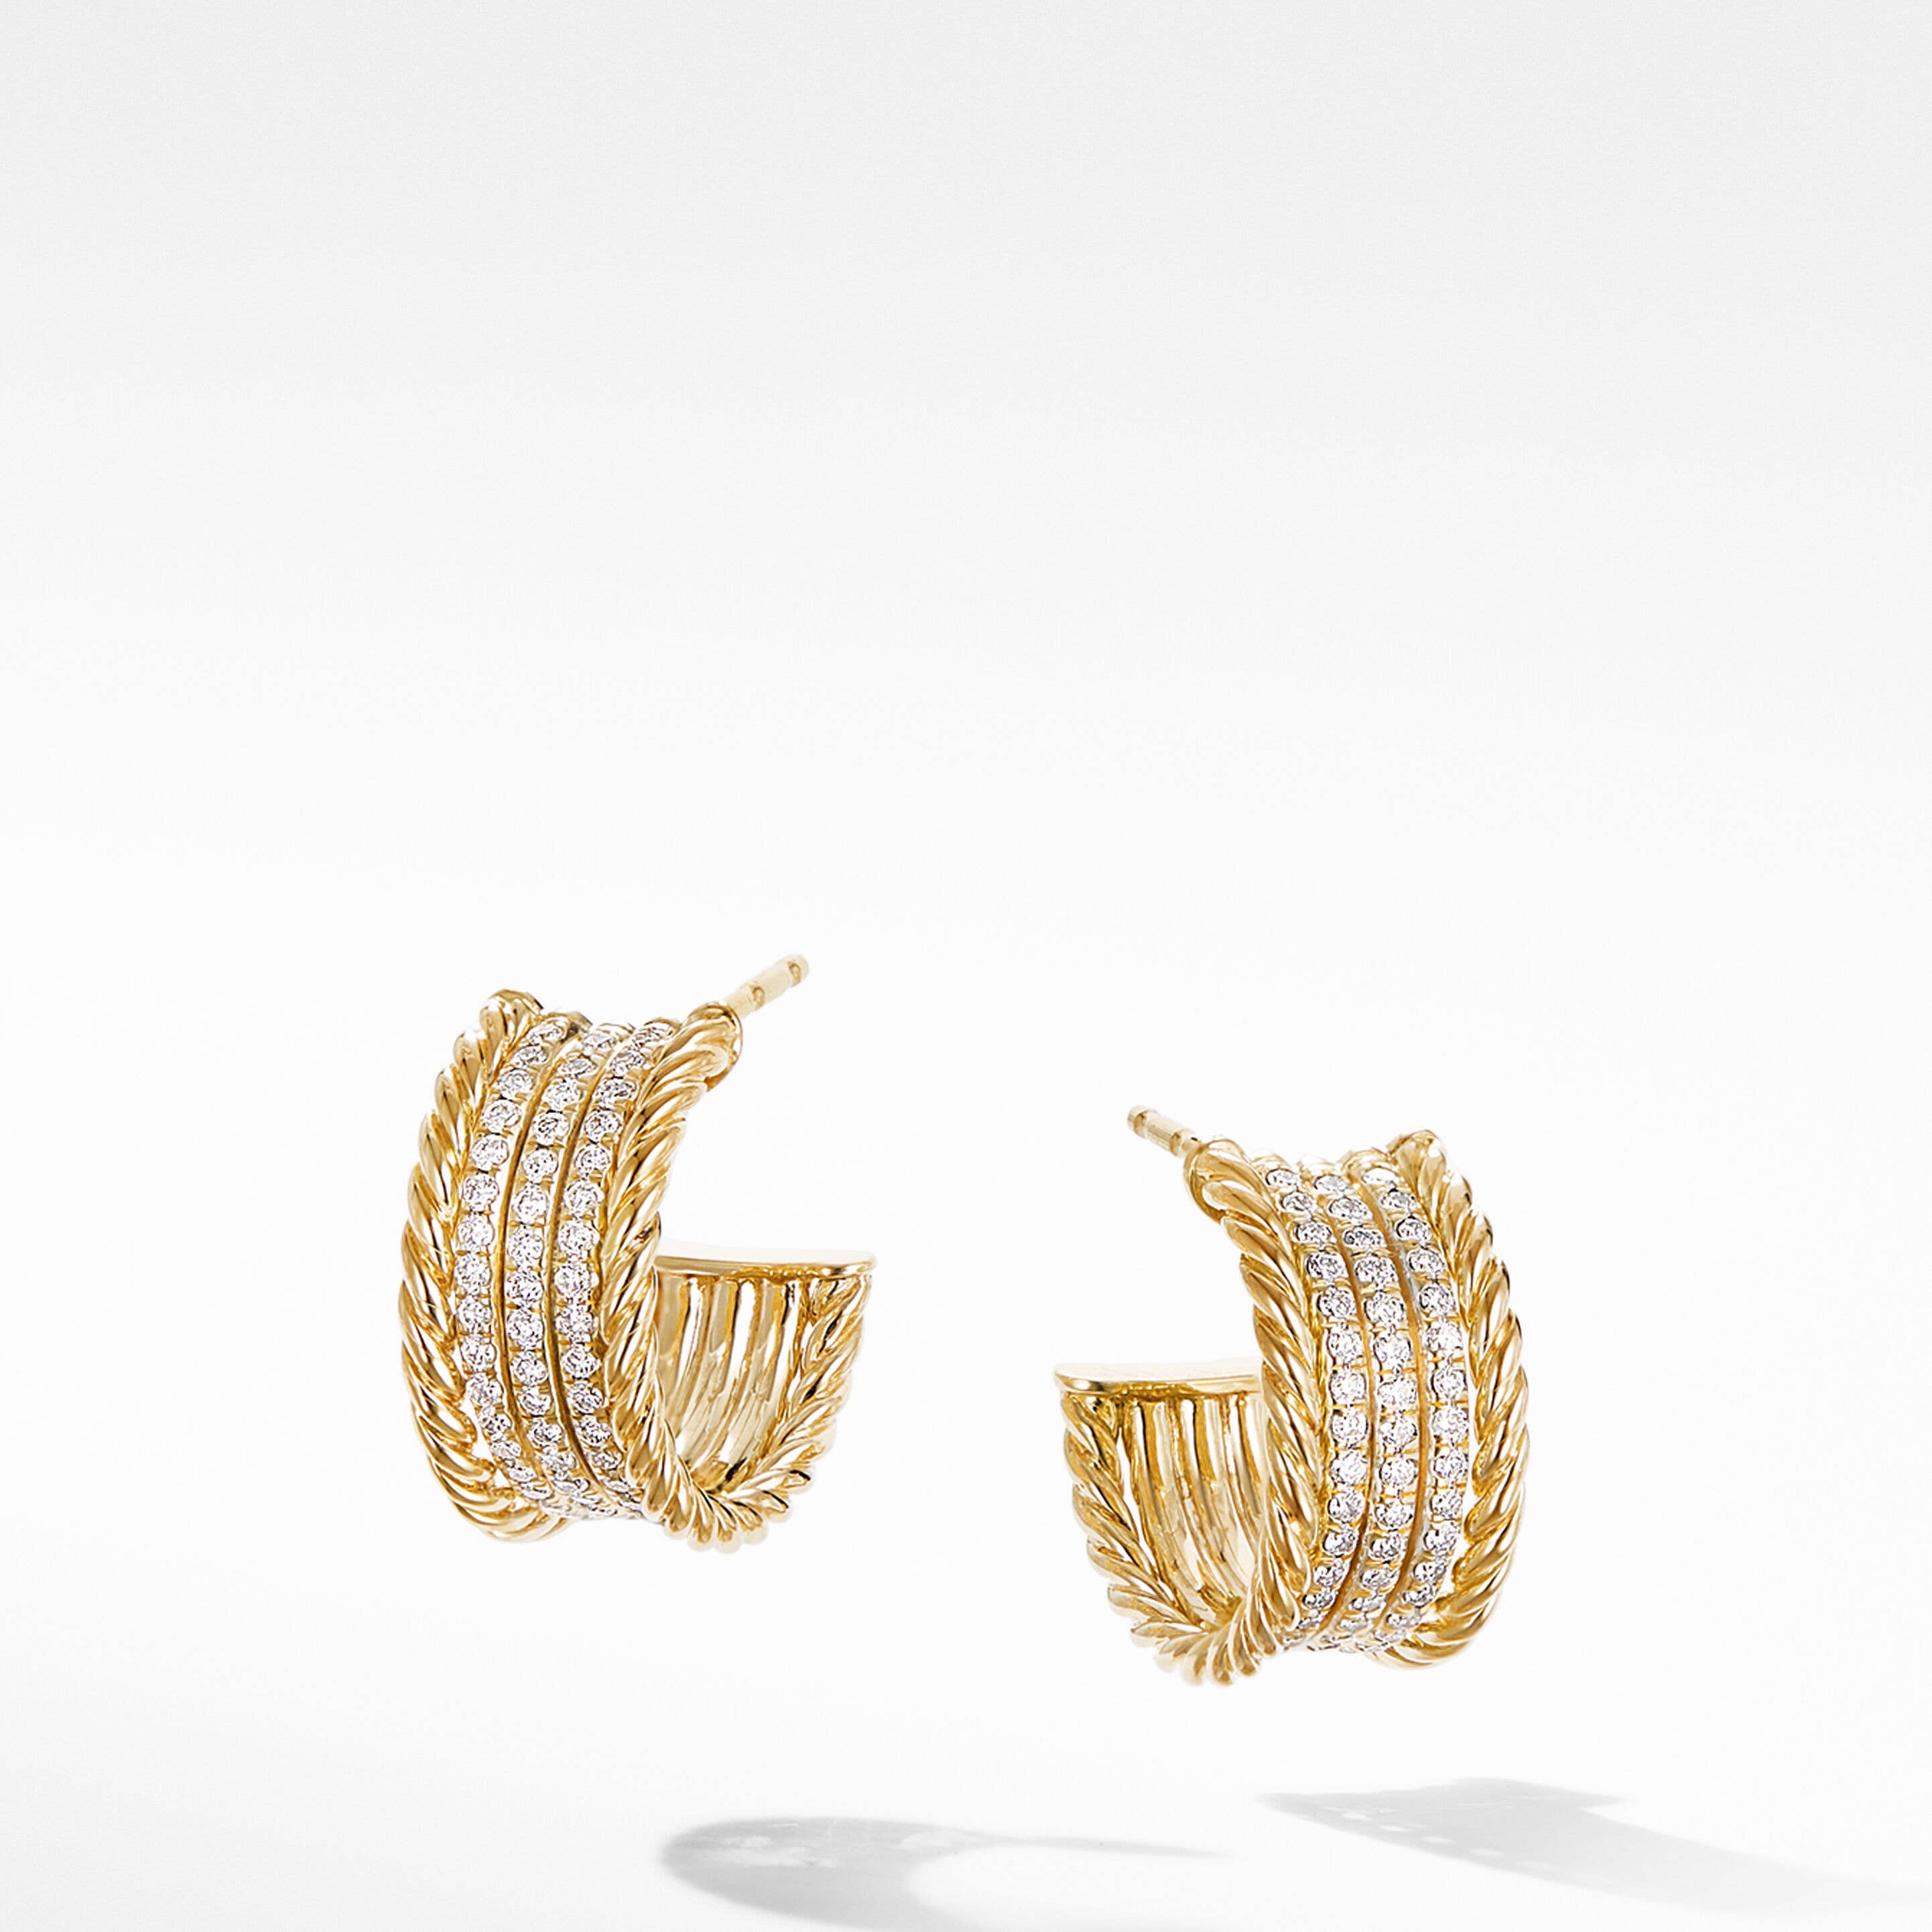 DY Origami Huggie Hoop Earrings in 18K Yellow Gold with Pavé Diamonds